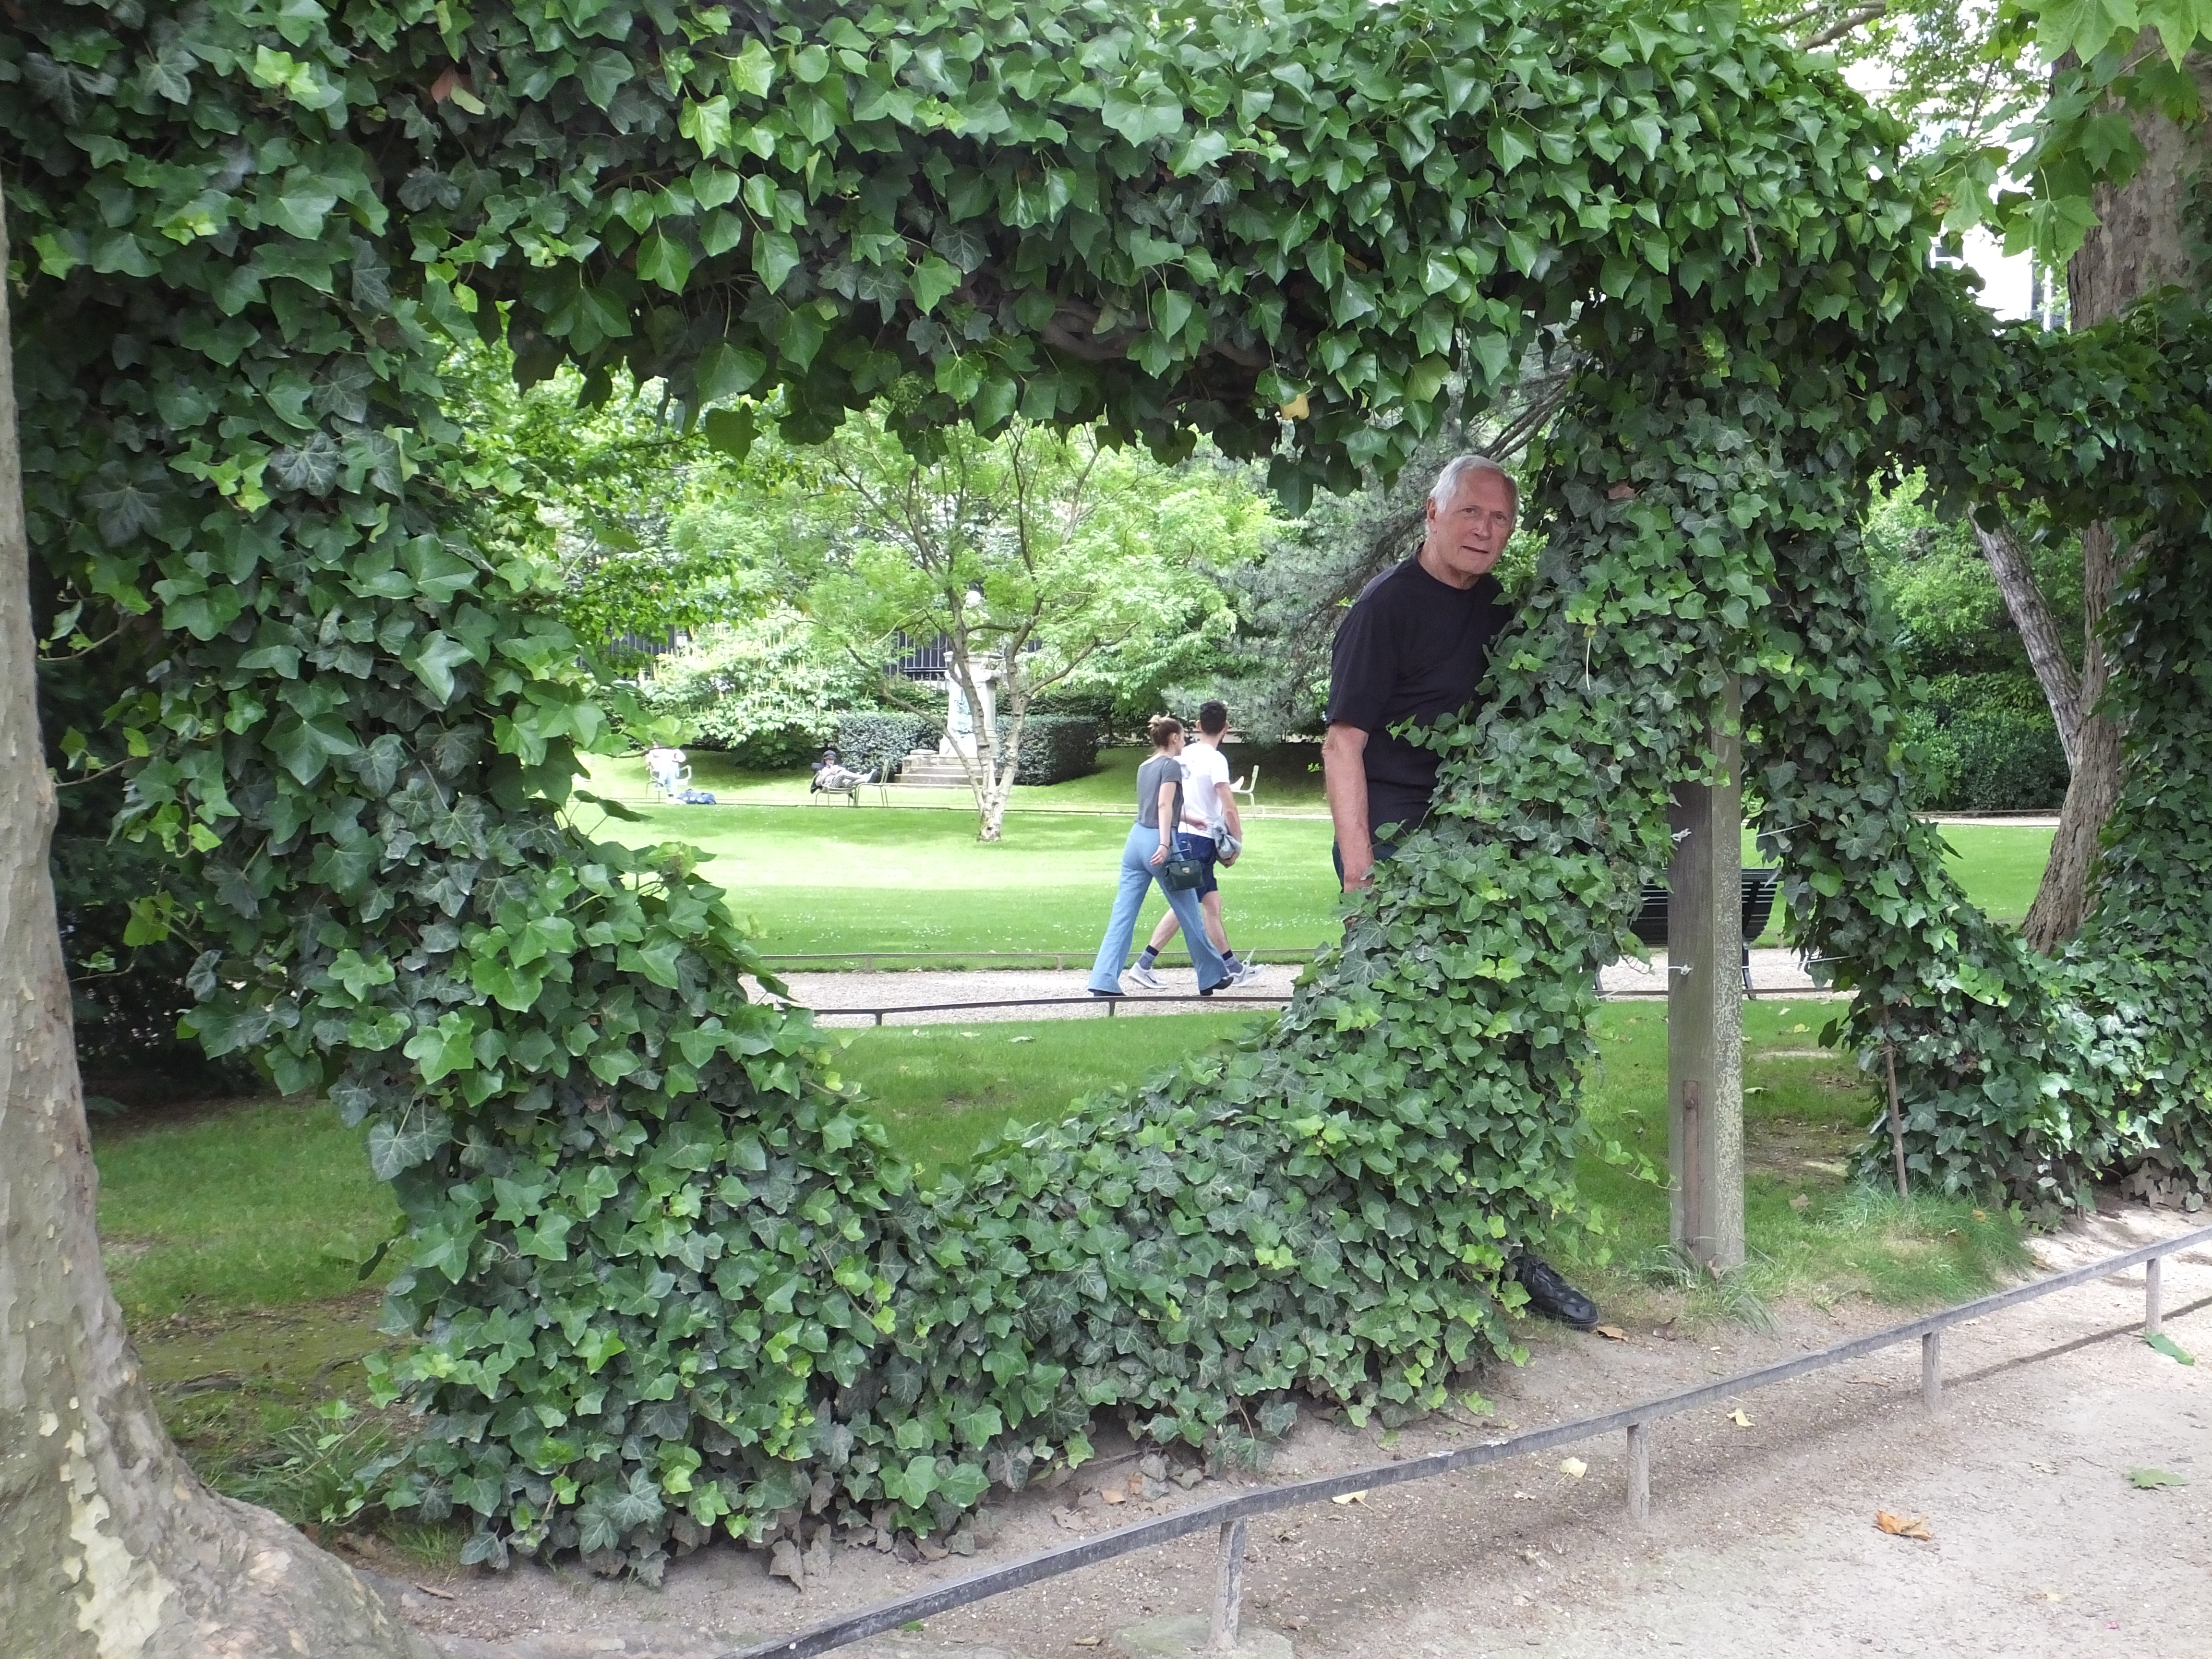 Who's that guy peeking through the ivy?